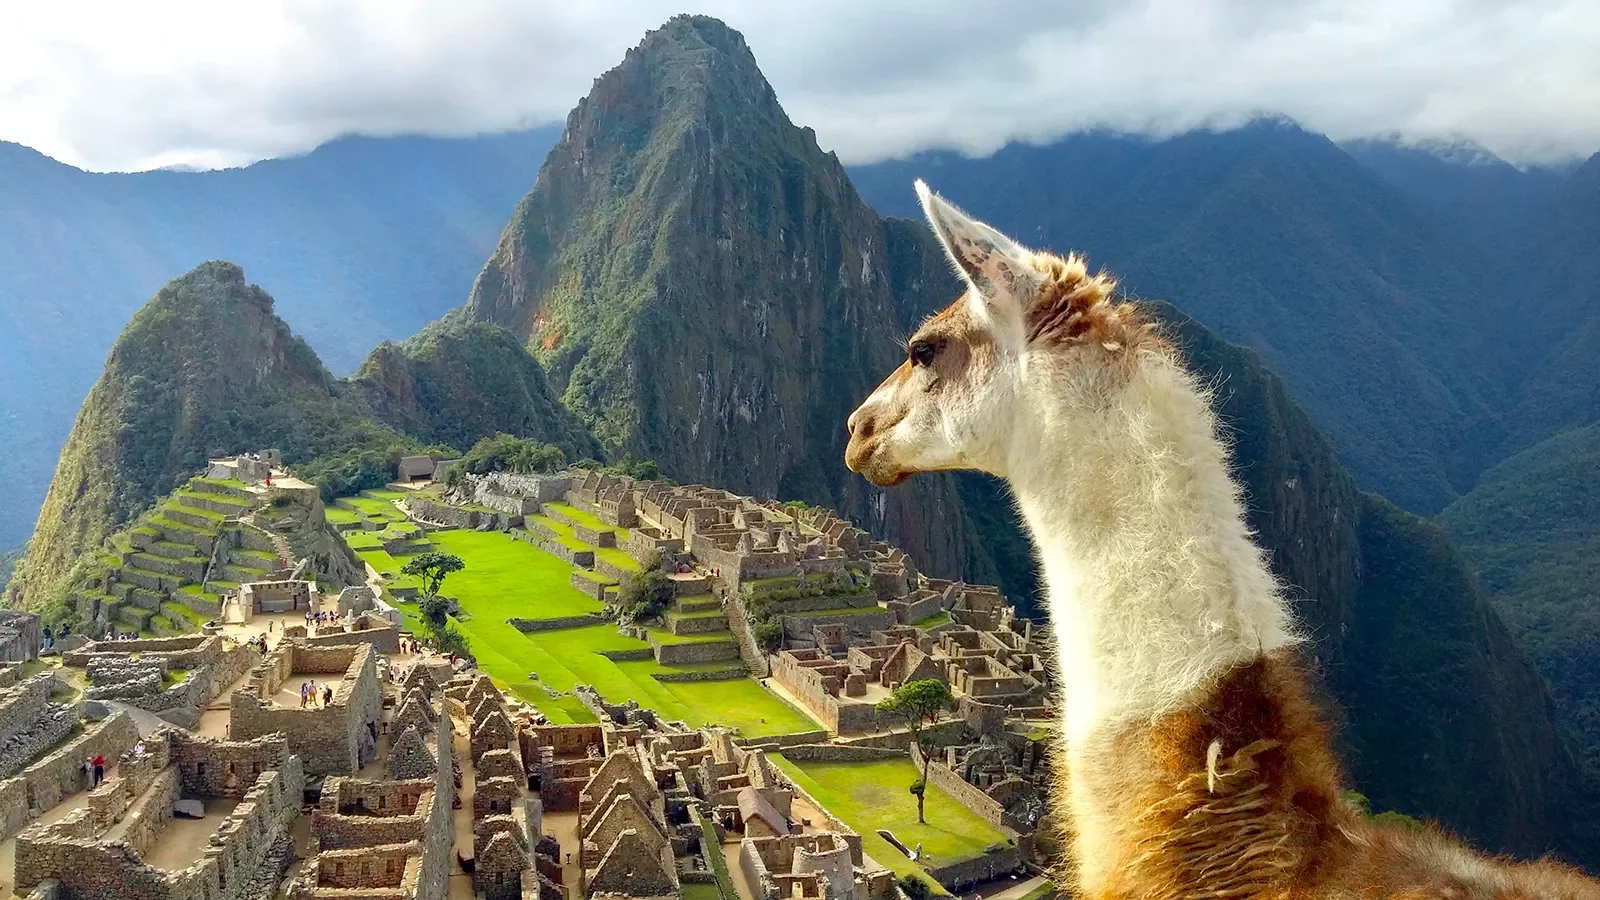 Over the shoulder shot of llama overlooking Machu Picchu.